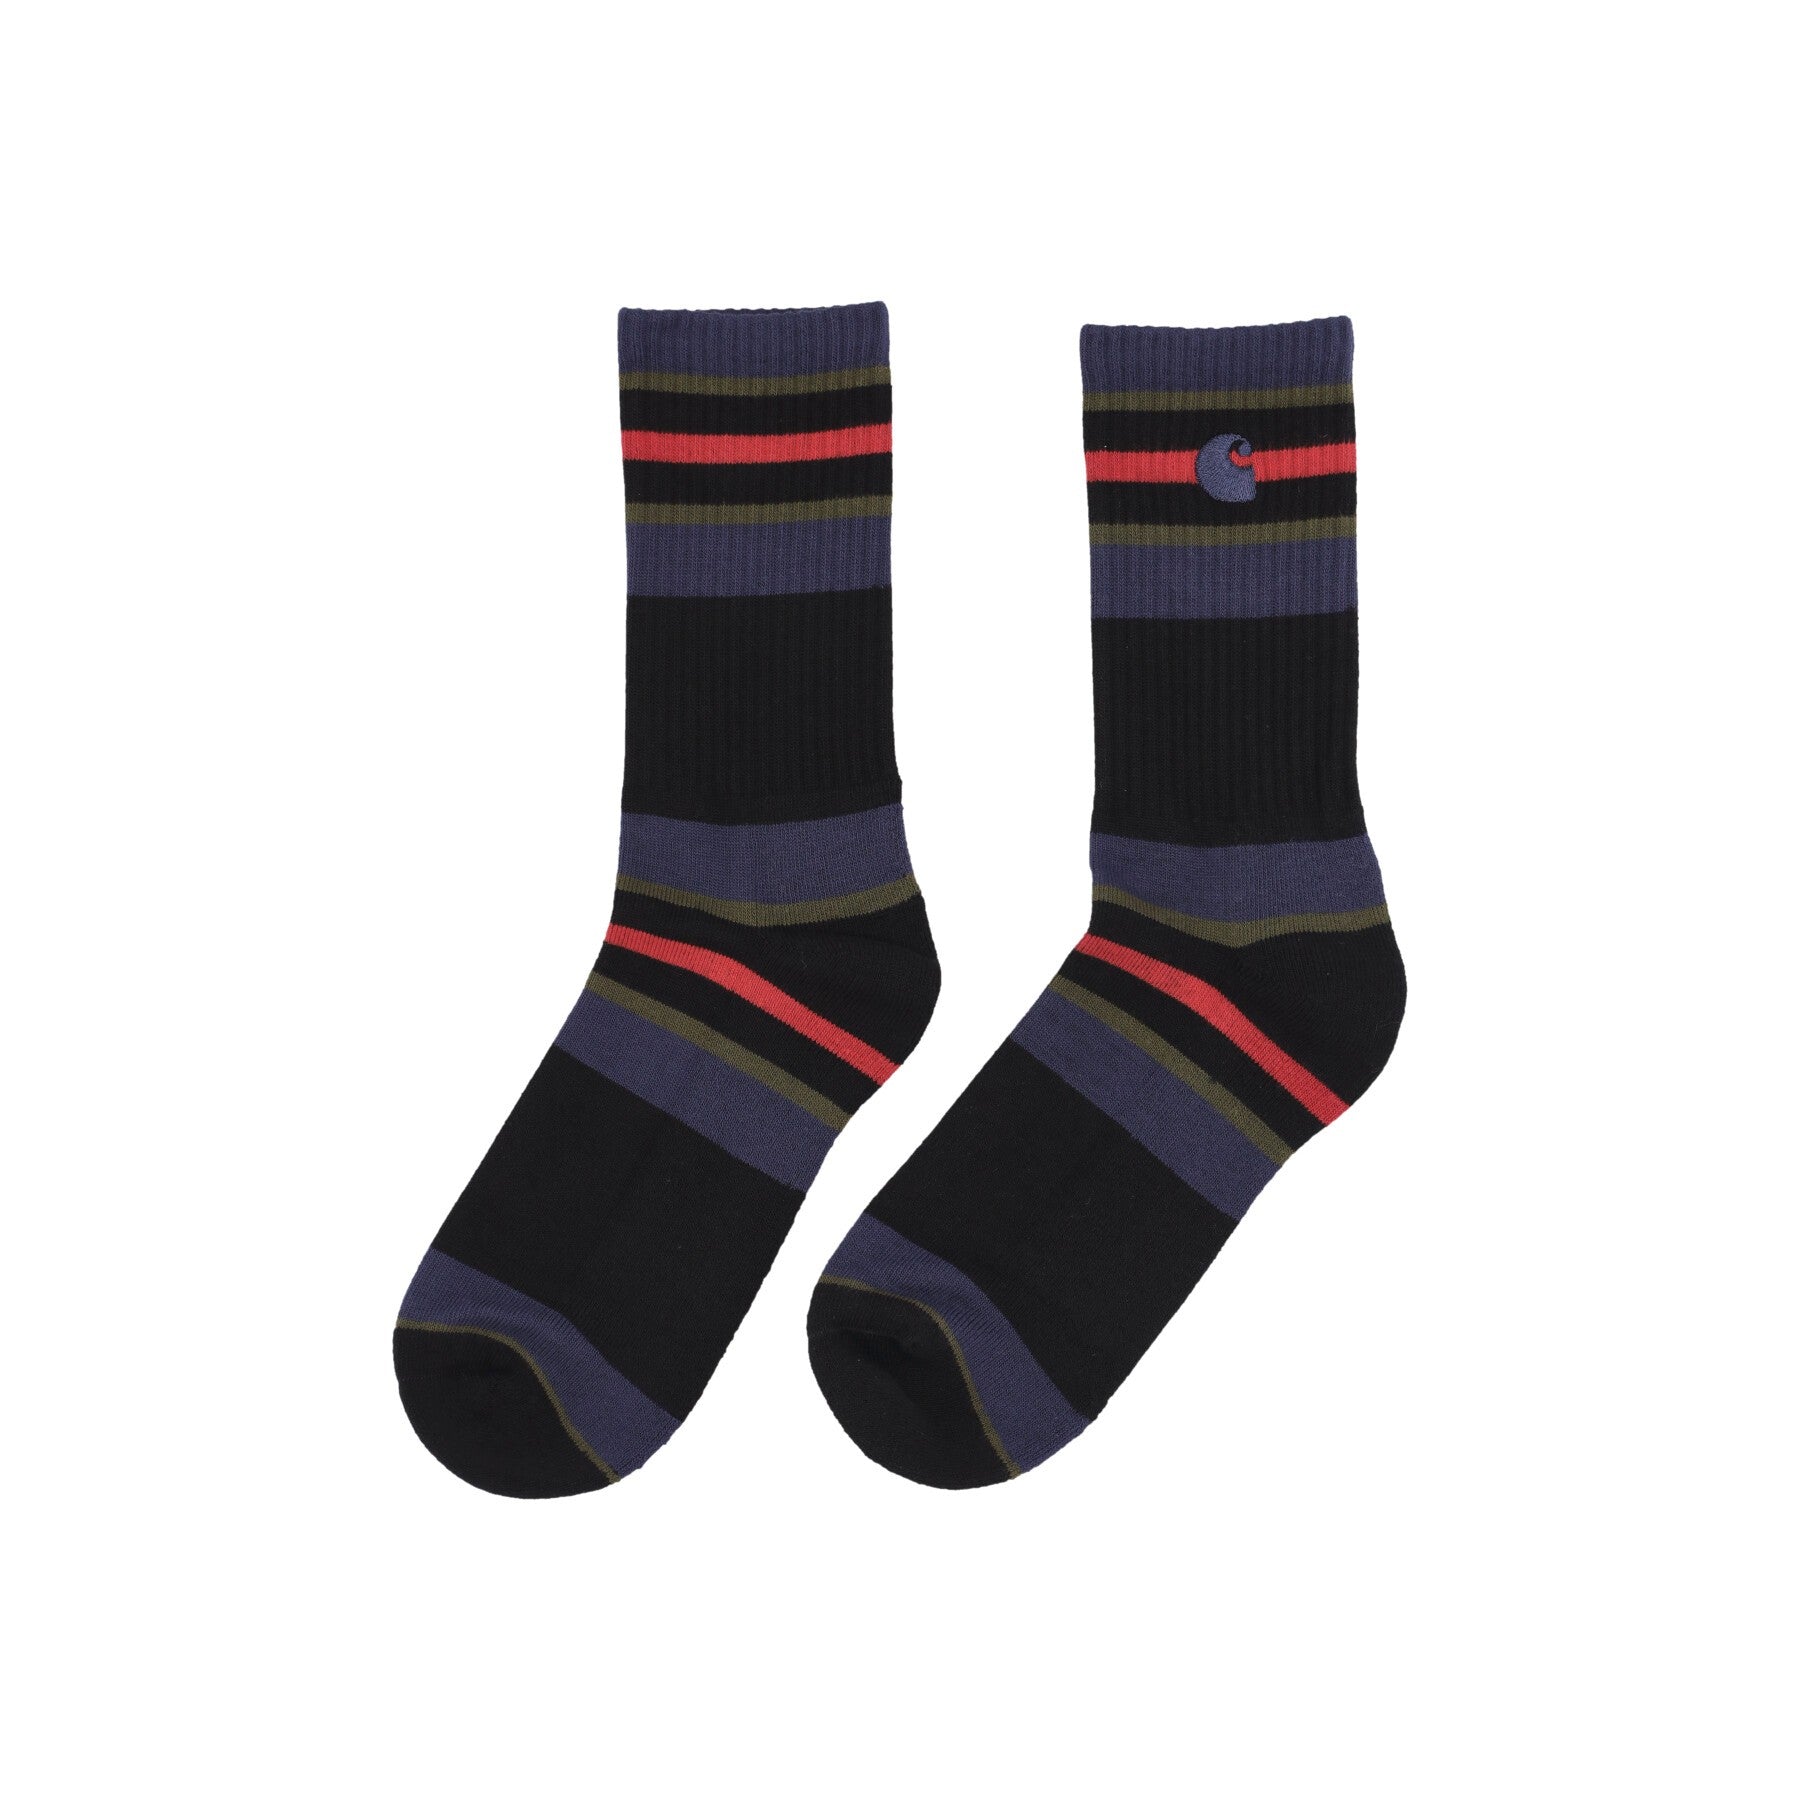 Carhartt Wip, Calza Media Uomo Oregon Socks, Starco Stripe/black